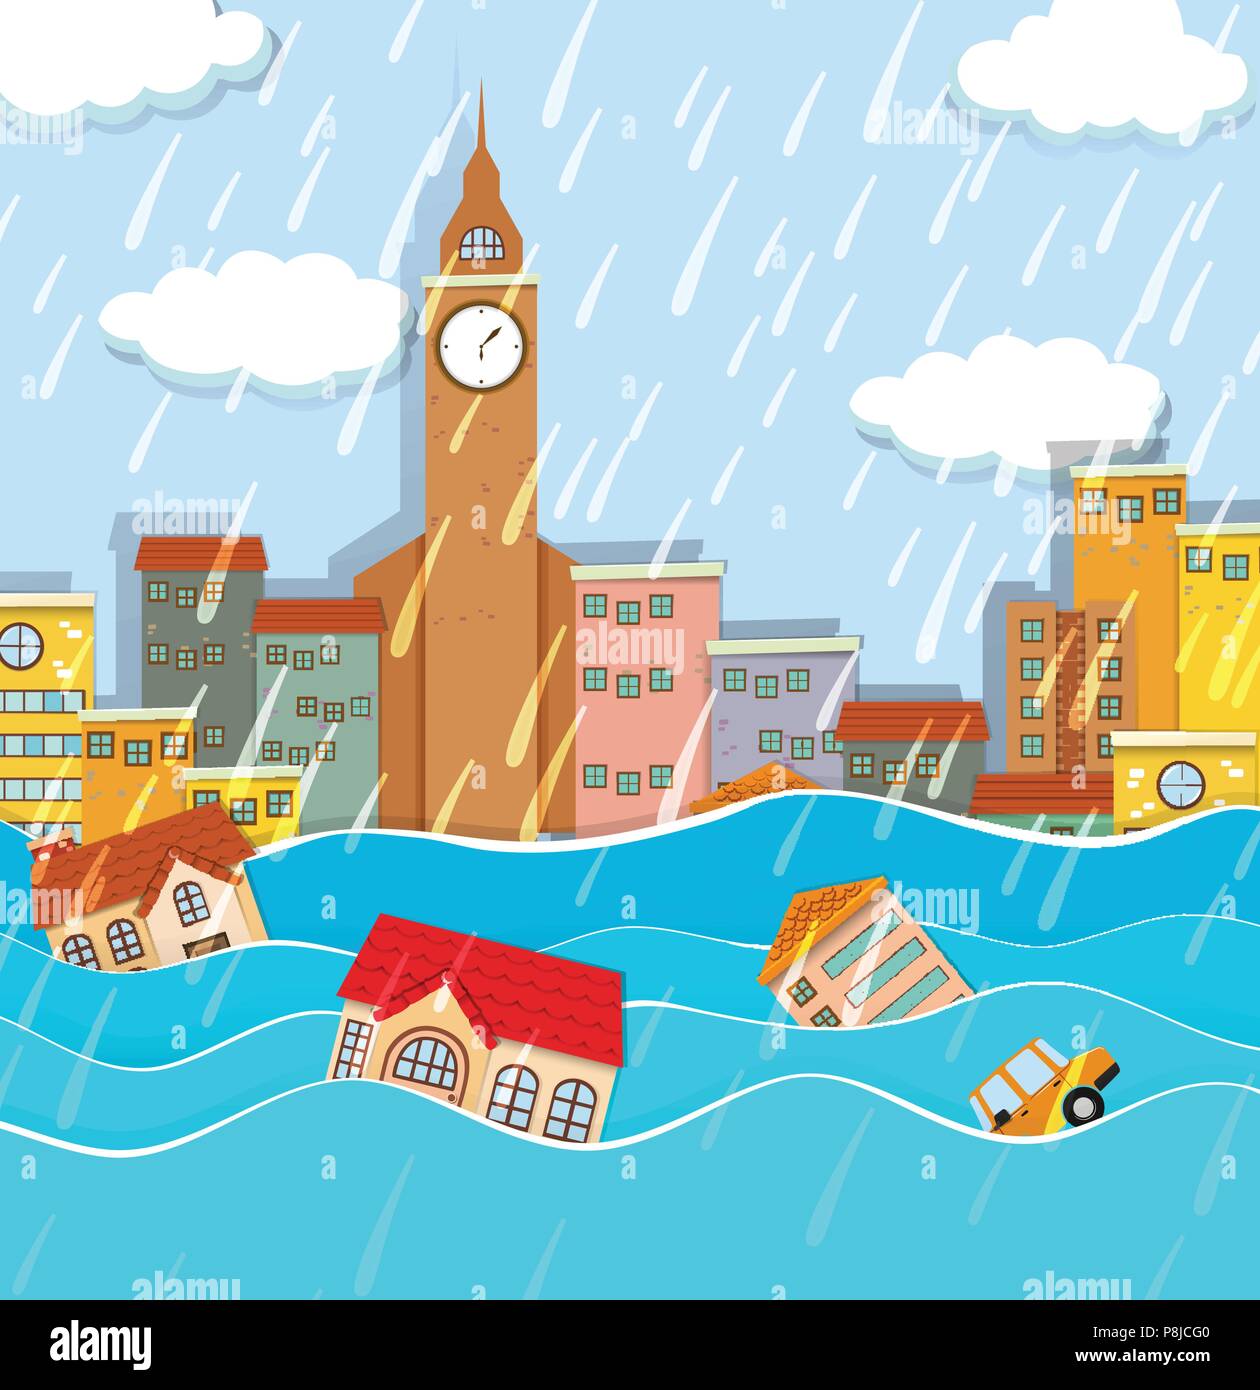 A Flood in Big City illustration Stock Vector Image & Art - Alamy